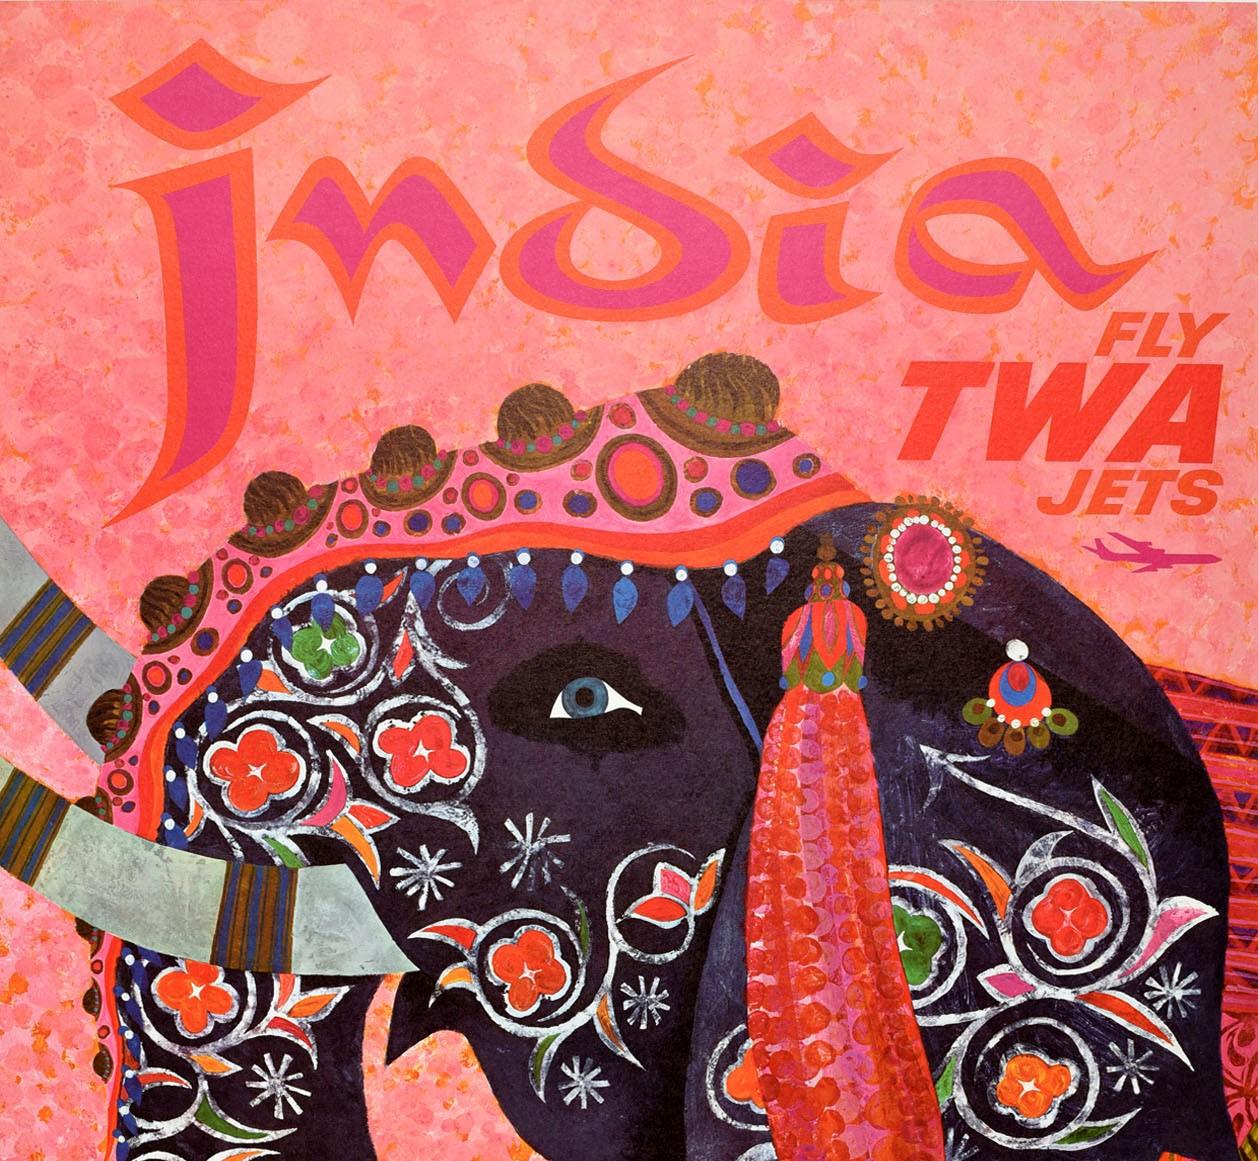 Original Vintage Air Travel Poster India Fly TWA Jets Up & Away Elephant Design - Print by David Klein